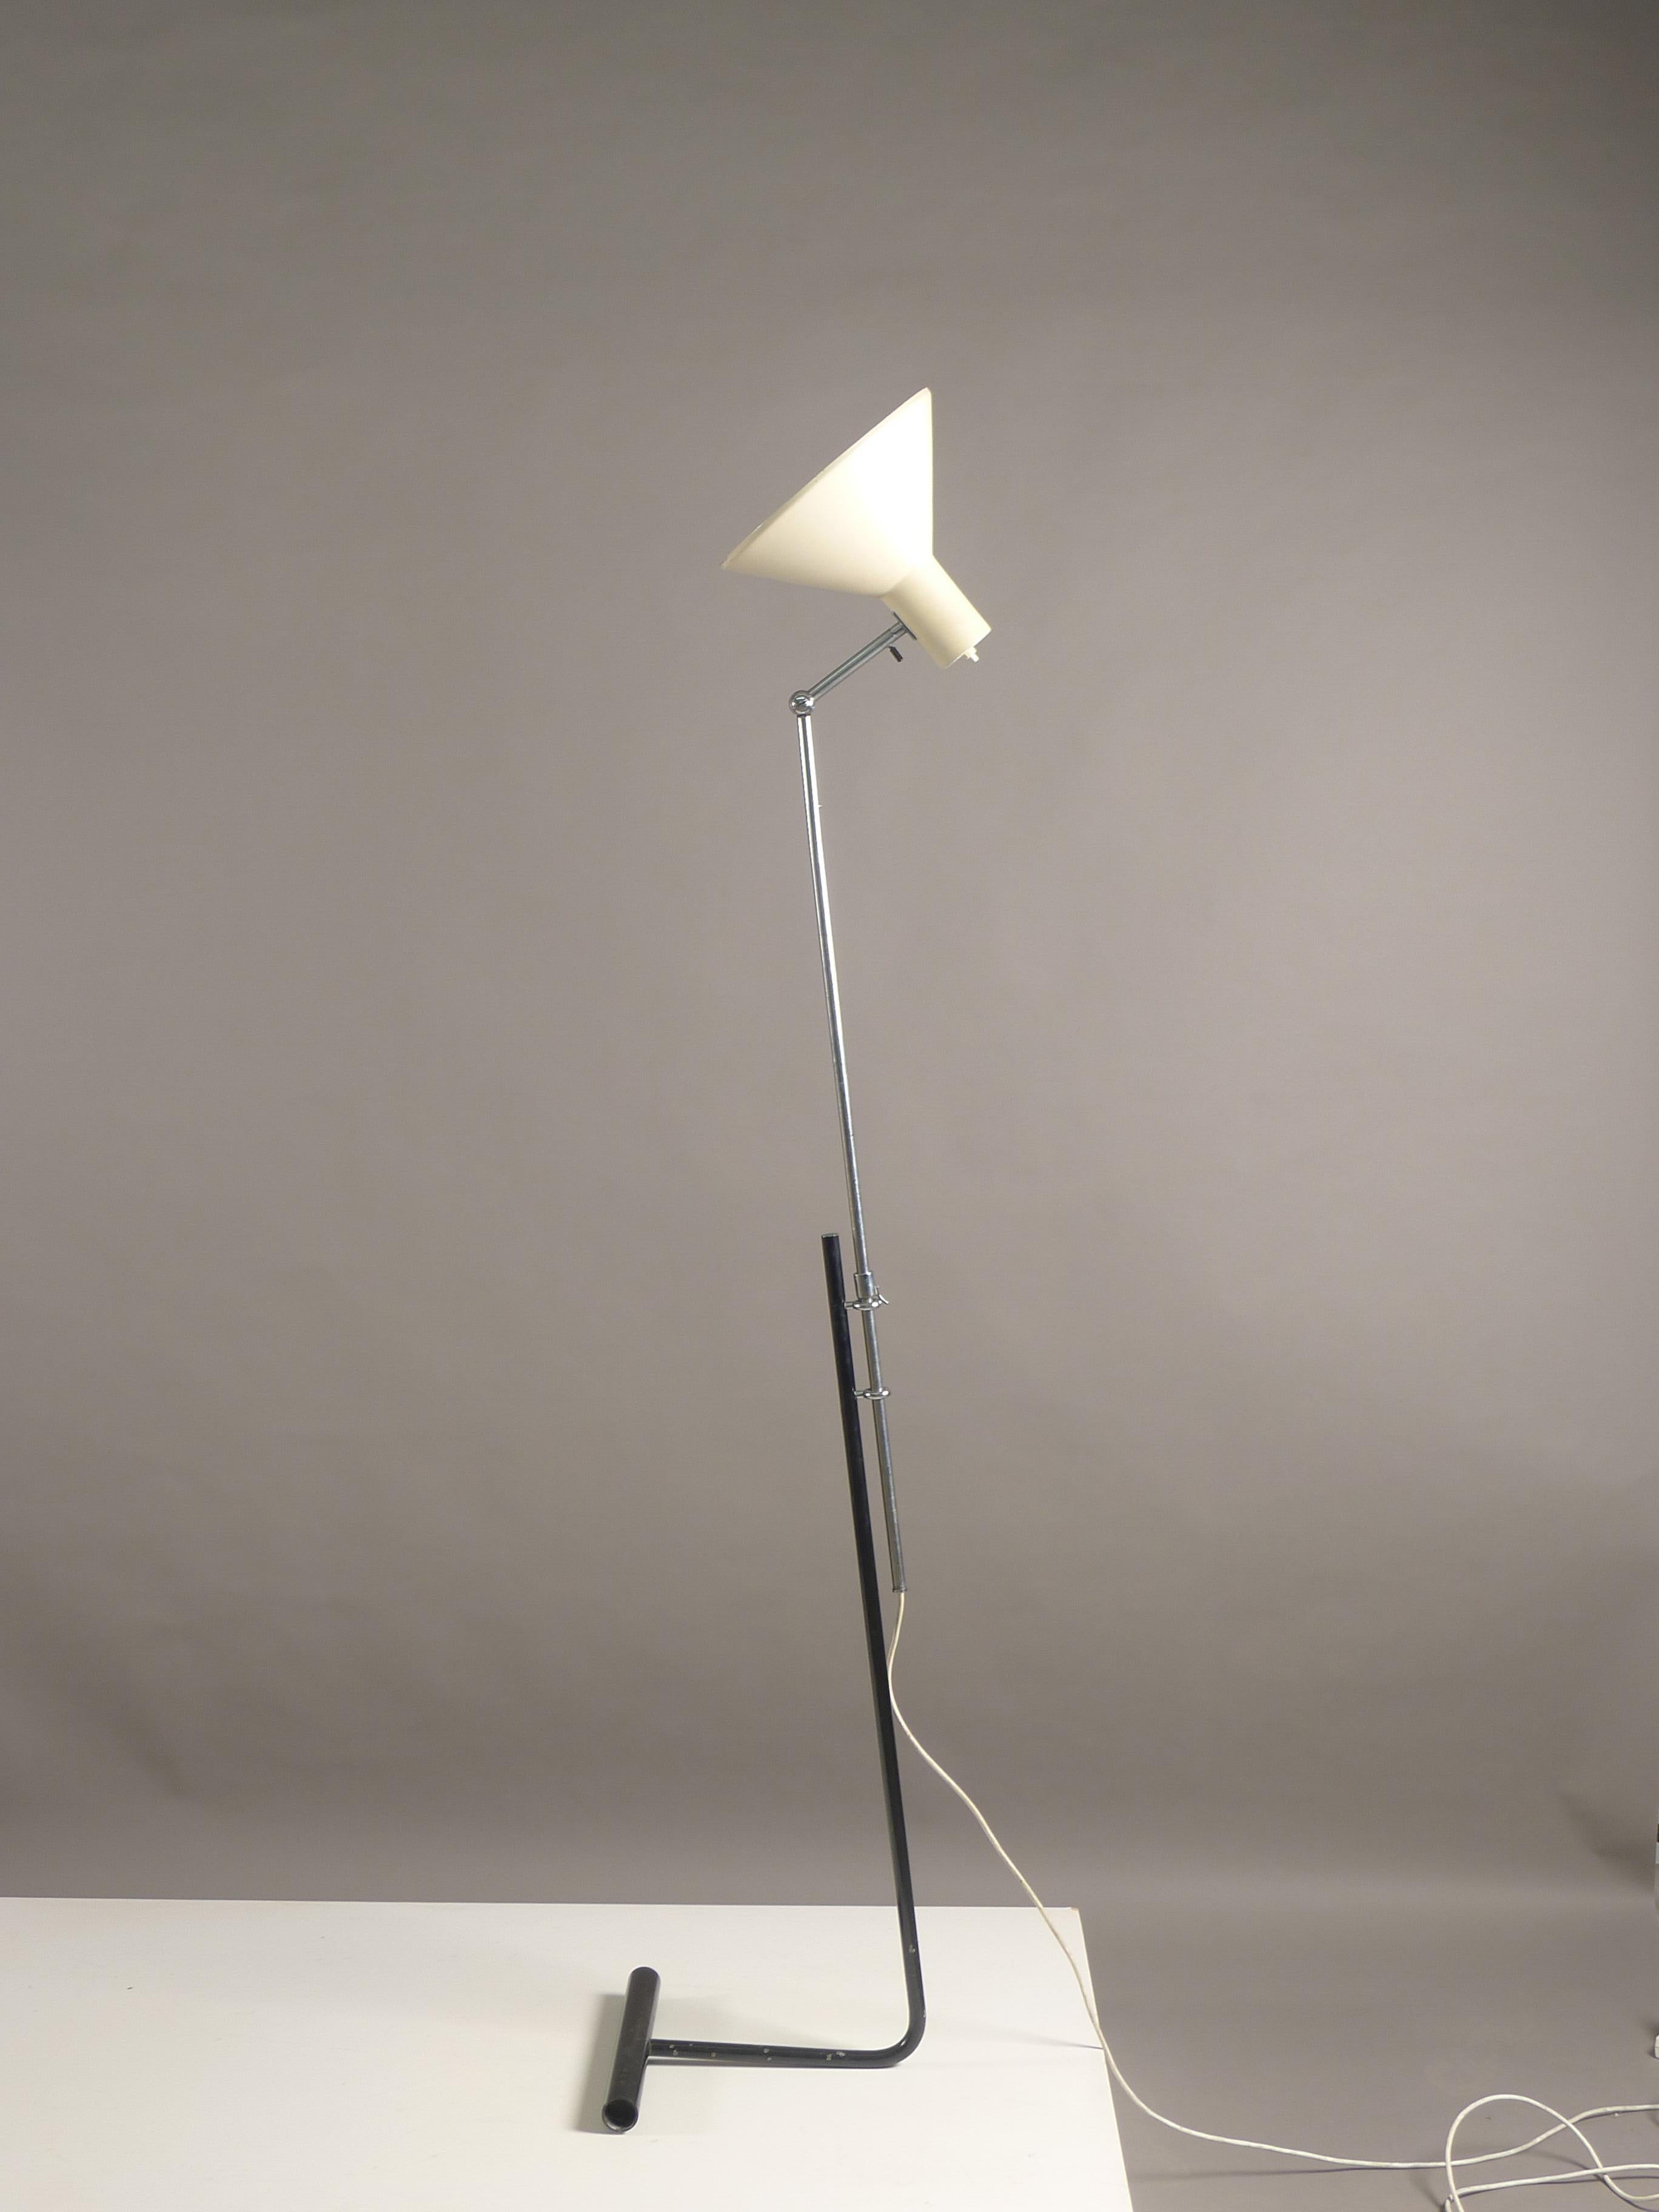 Brass Gino Sarfatti for Arteluce , Italy , model 1045 Floor Lamp circa 1948 .   For Sale